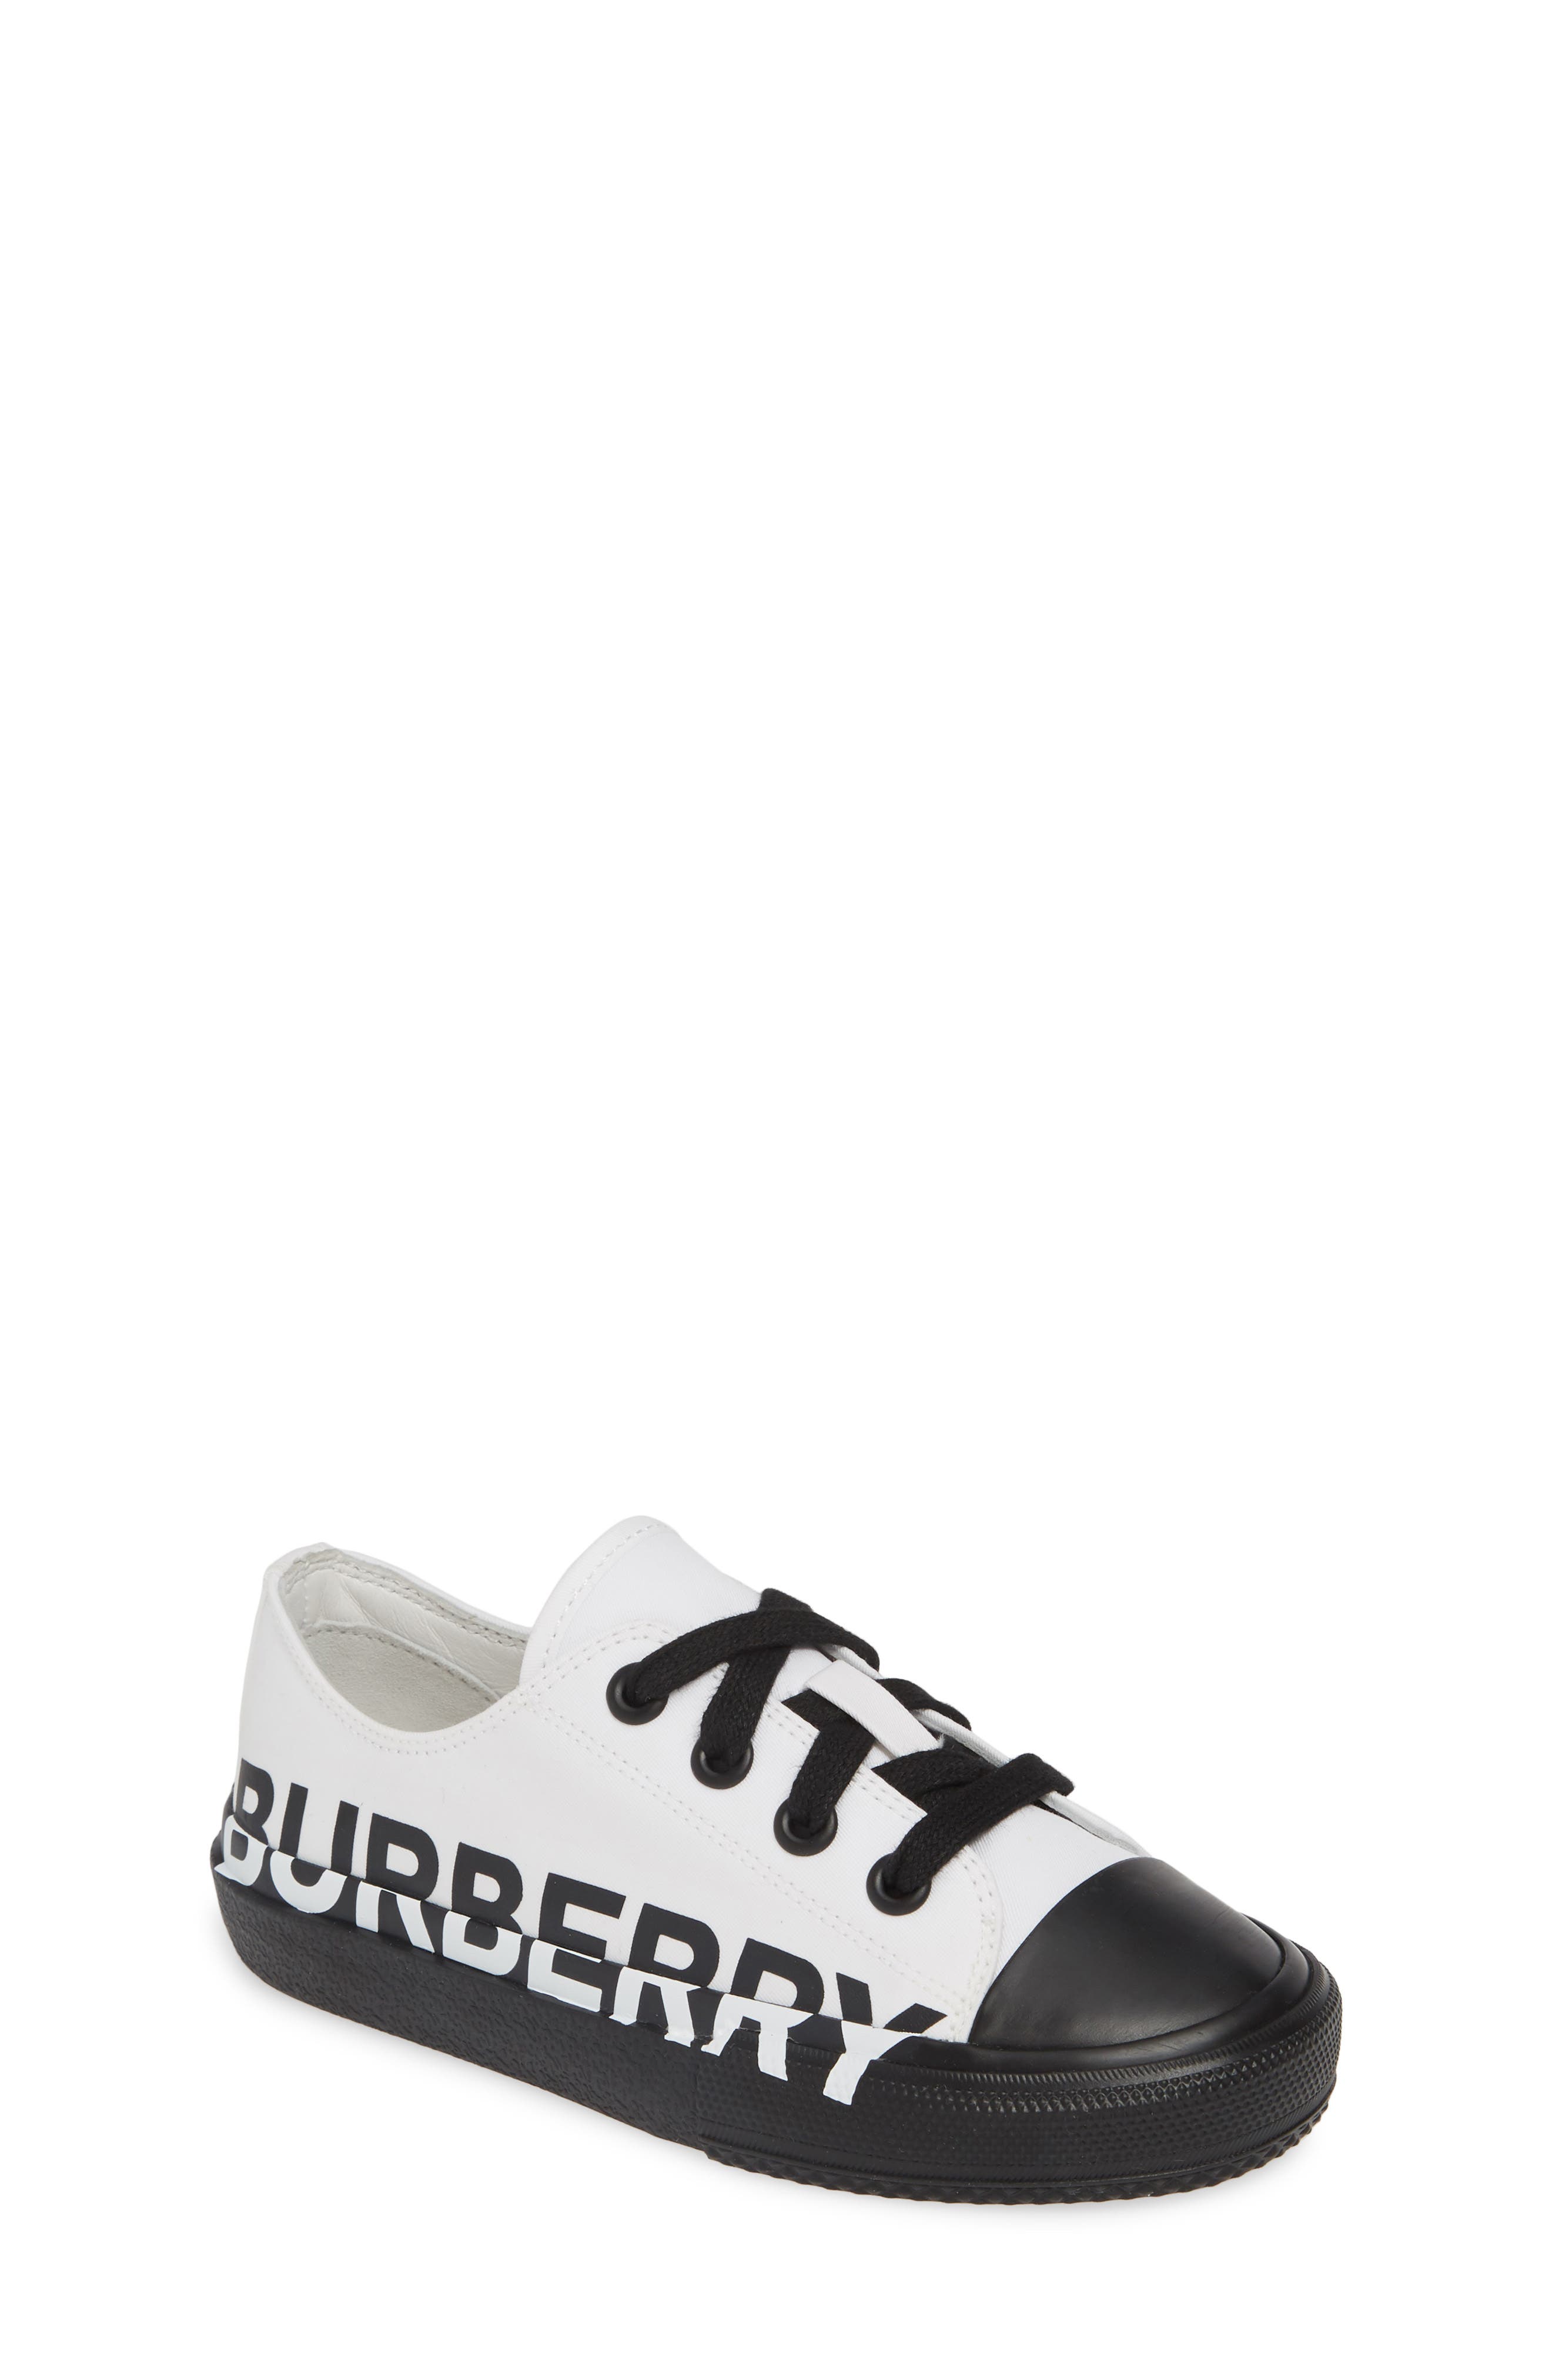 burberry sneakers nordstrom